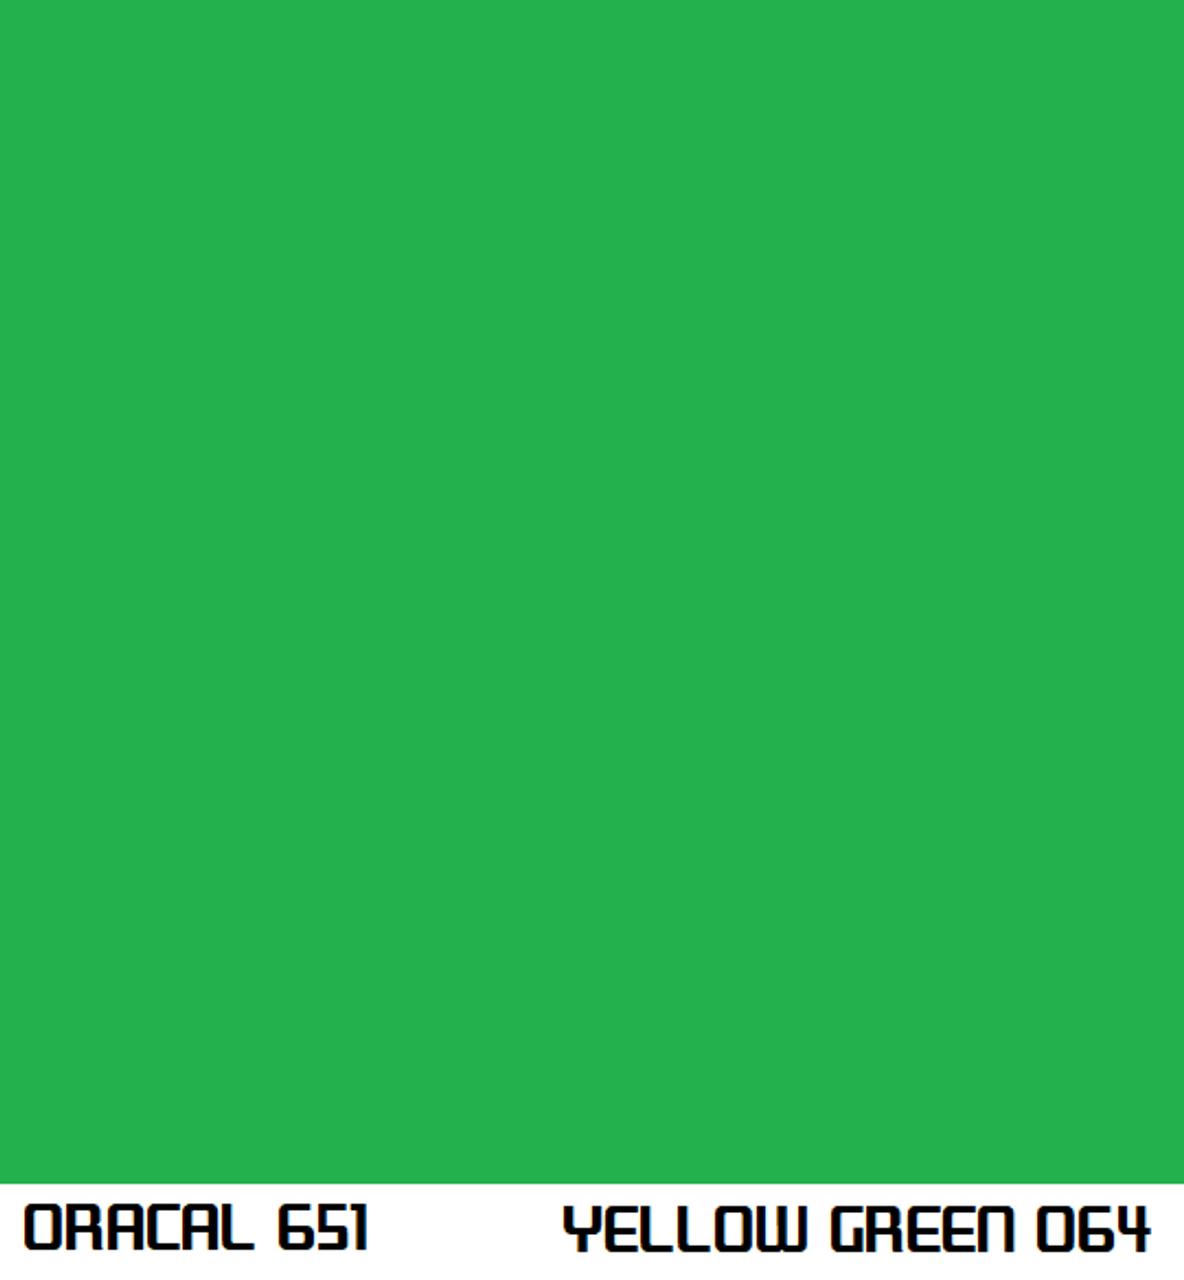 Oracal 651 Permanent Adhesive Vinyl Gloss - Yellow Green 064 - JDMFV WRAPS